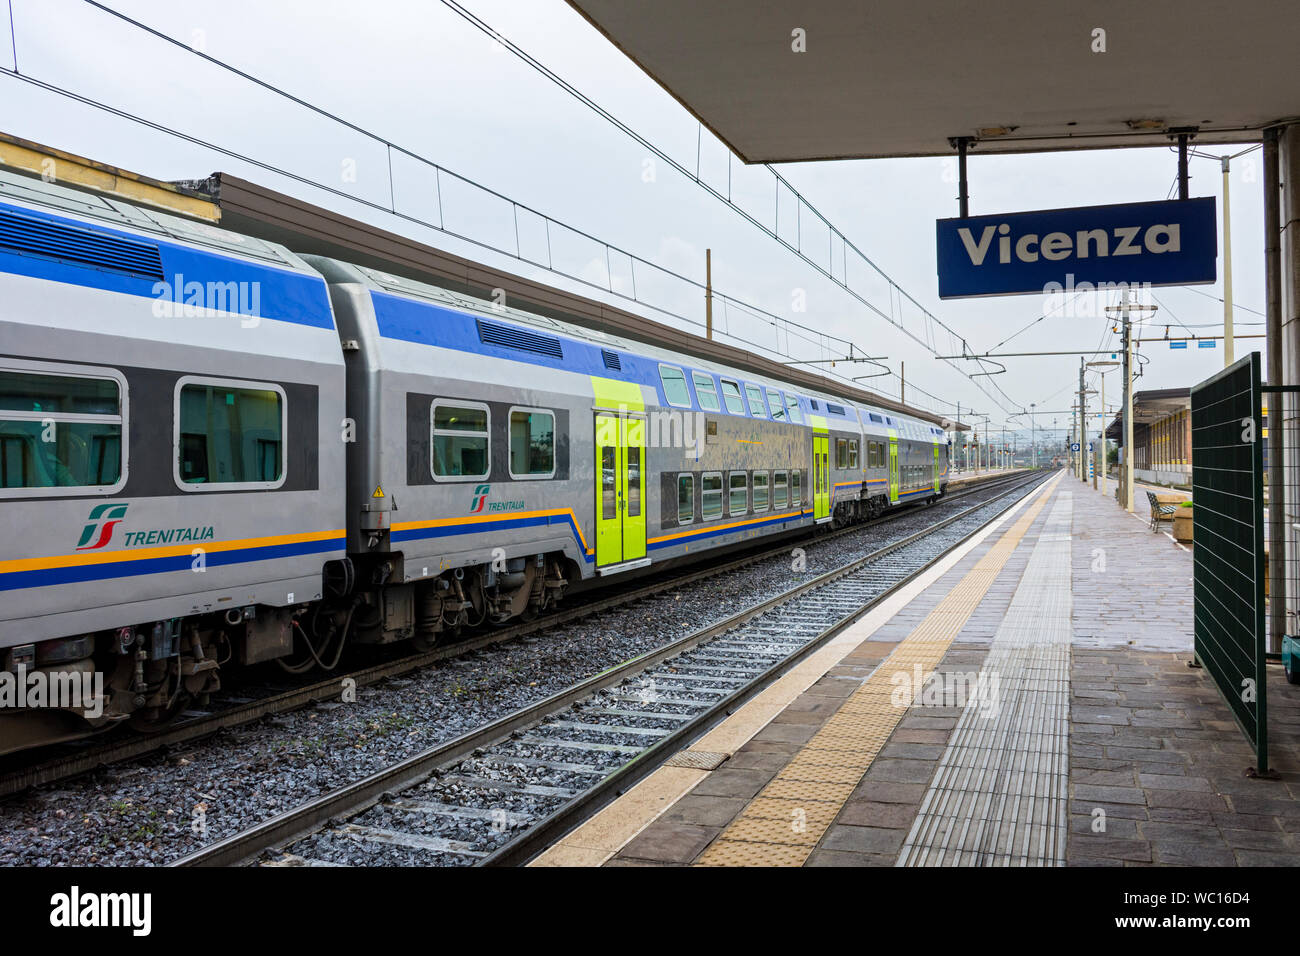 The railway station at Vicenza, Italy Stock Photo